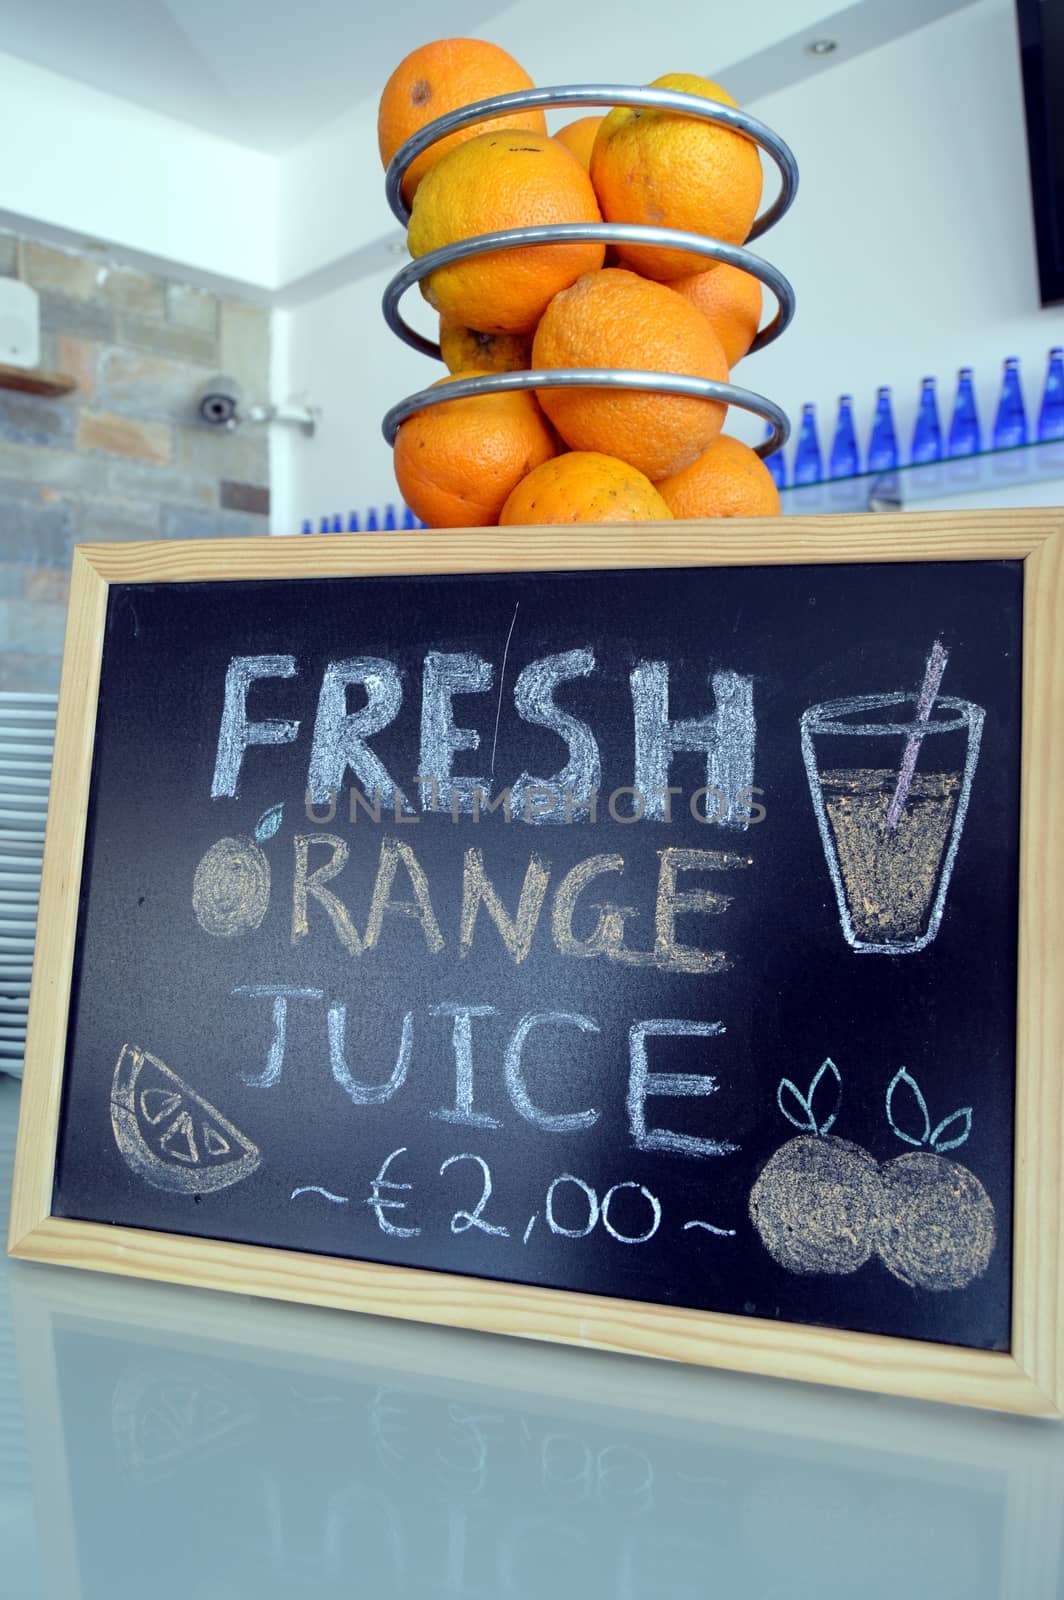 Panel fresh orange juice on a counter.